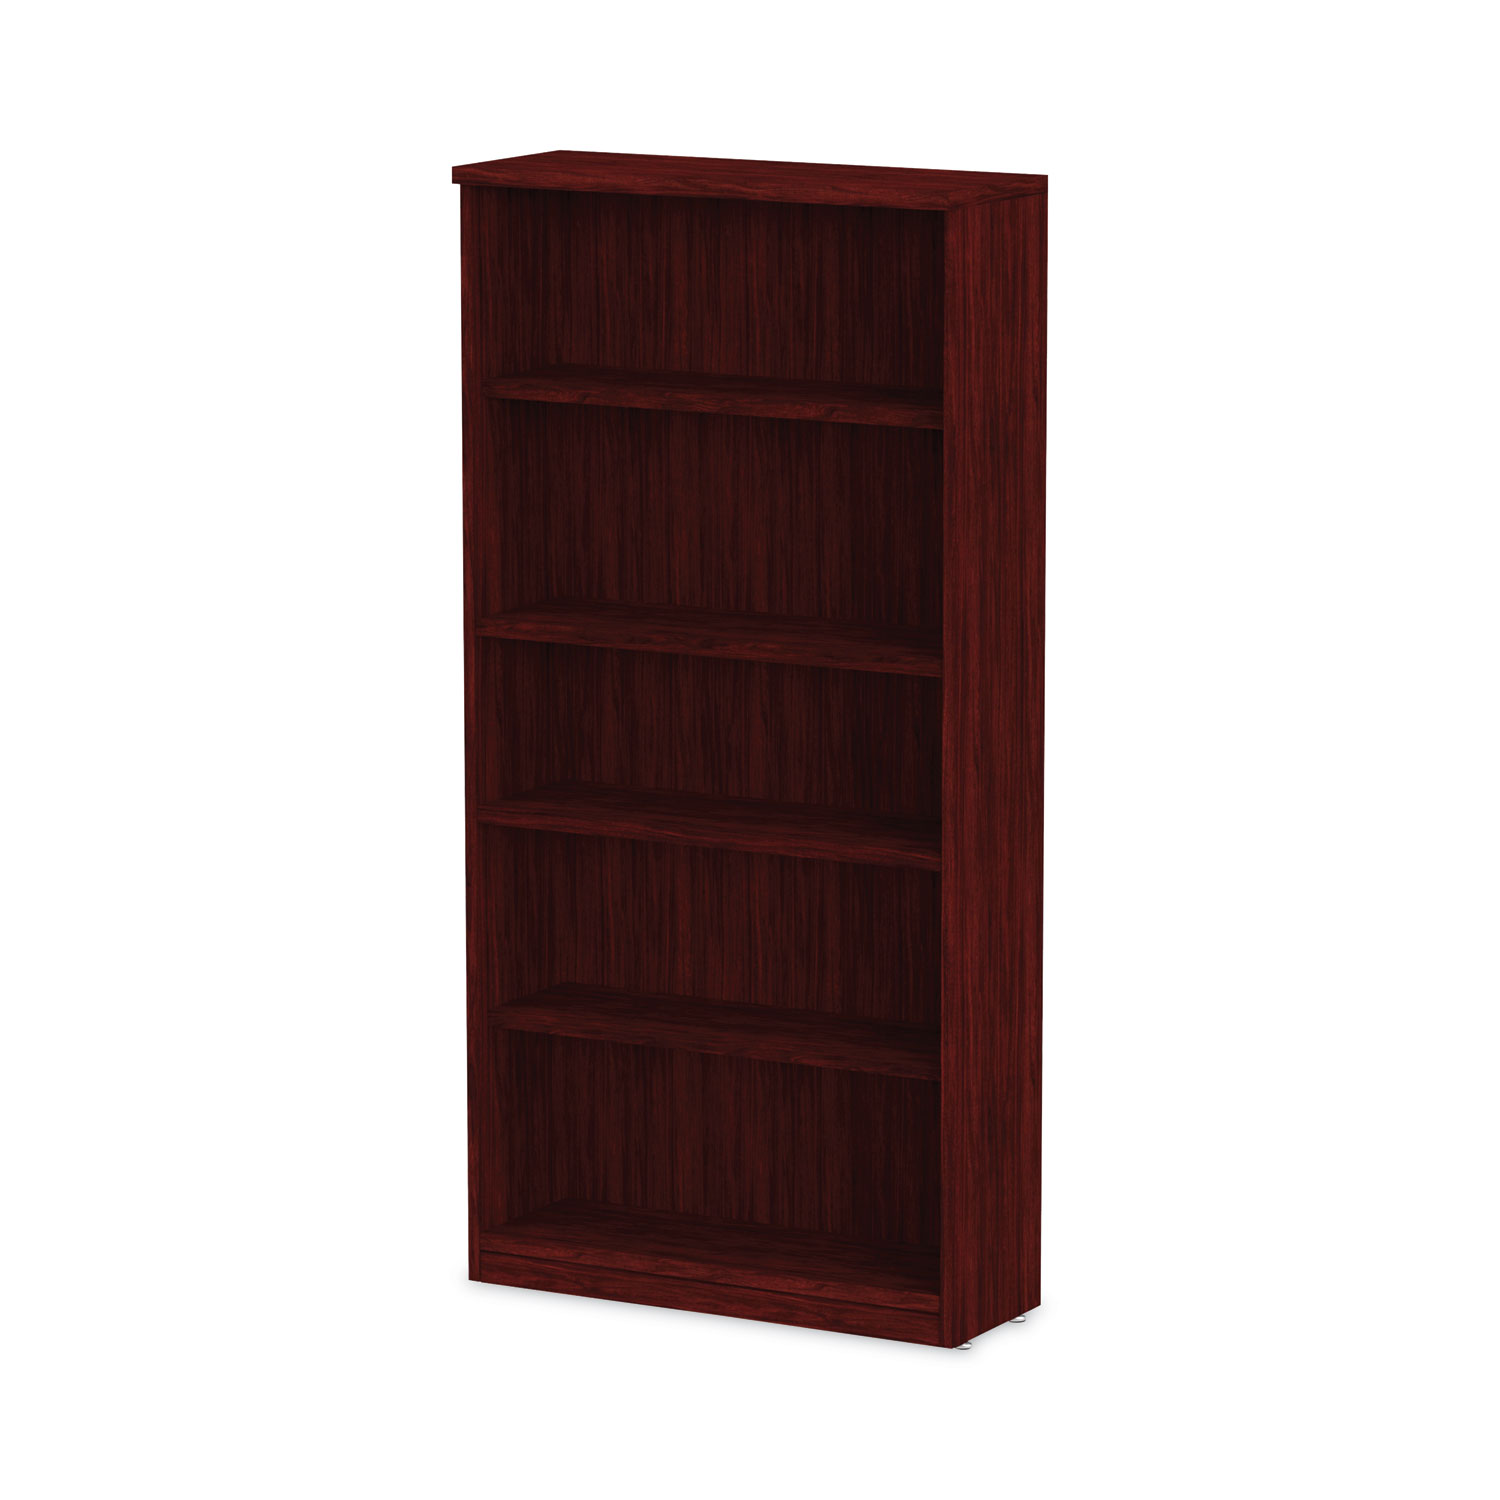 Medium Cherry 31 3/4w x 14d x 65h Alera Valencia Series Bookcase Five-Shelf 